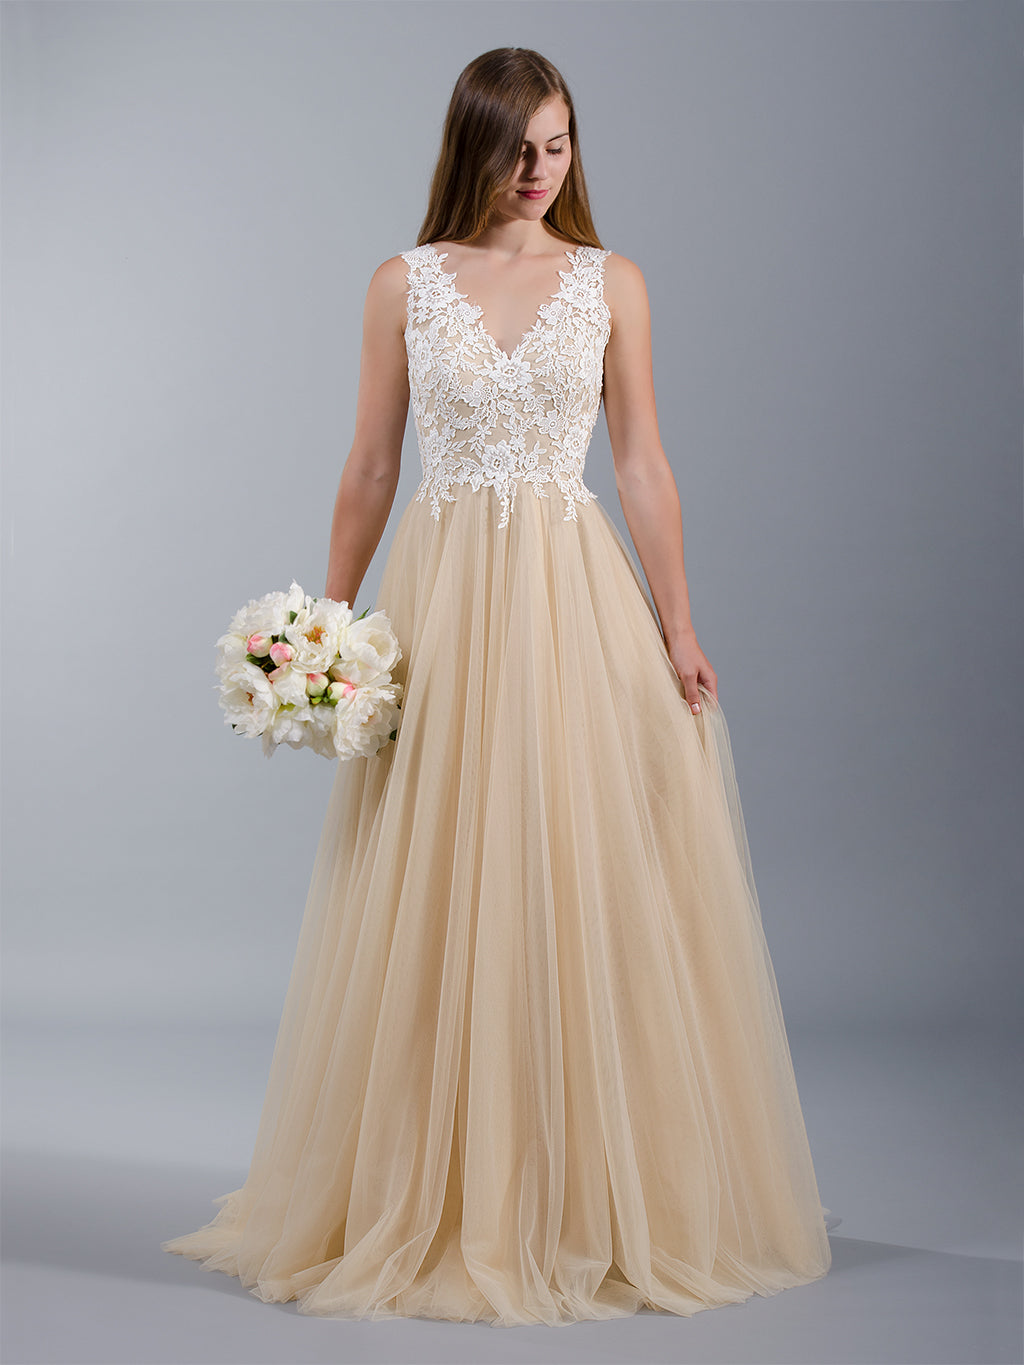 Sleeveless Lace Wedding Dress With Tulle Skirts 4041 Wedding